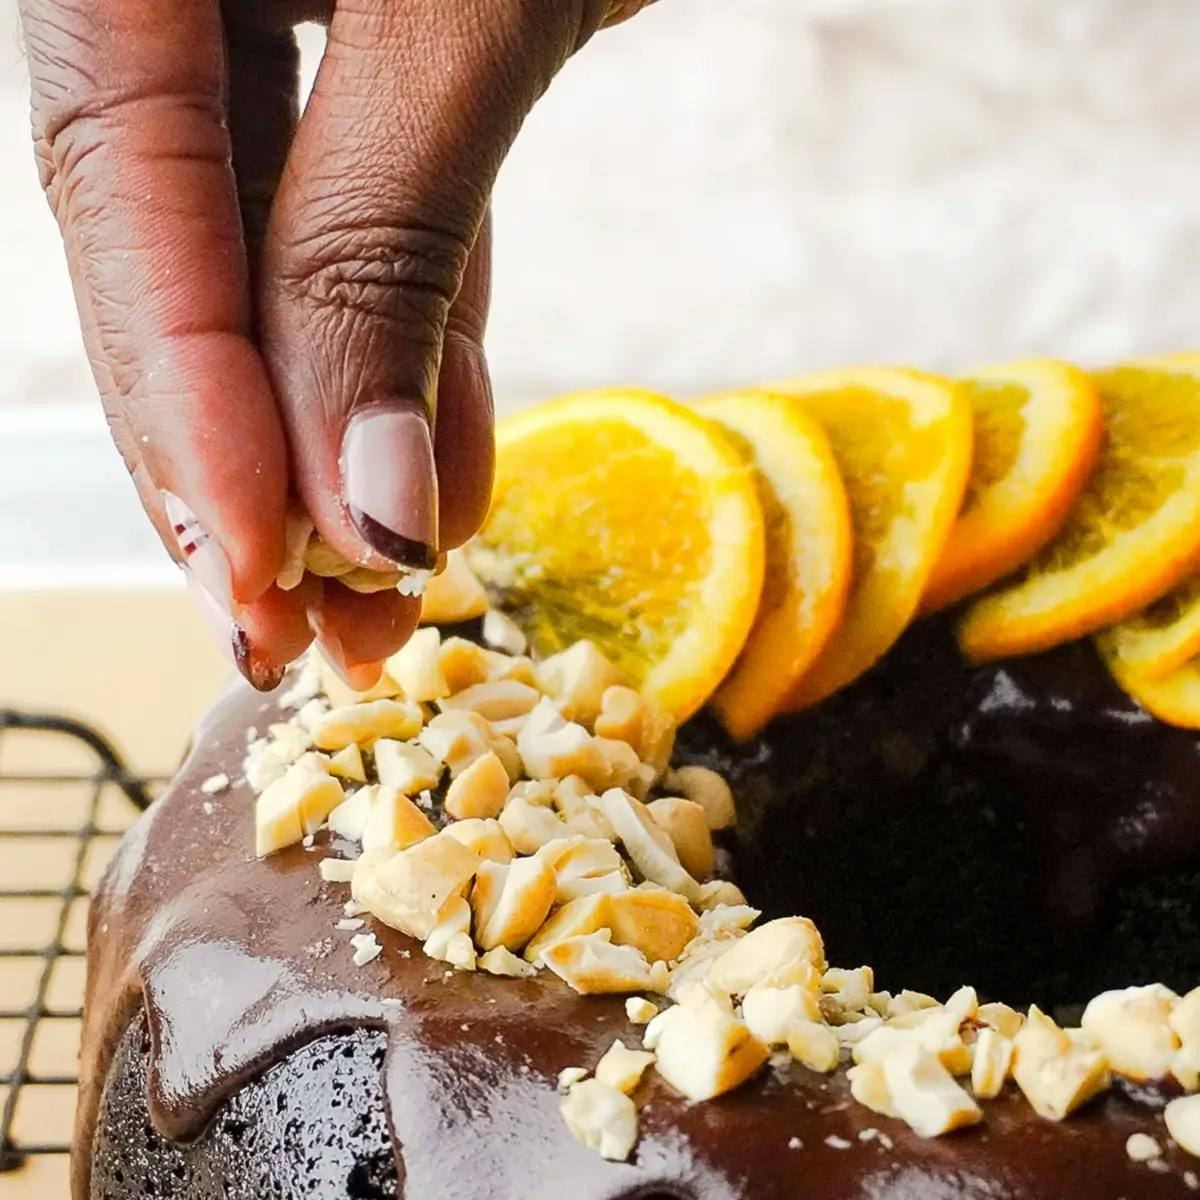 Fingers garnishing a vegan chocolate orange bundt cake with orange slices and nuts.